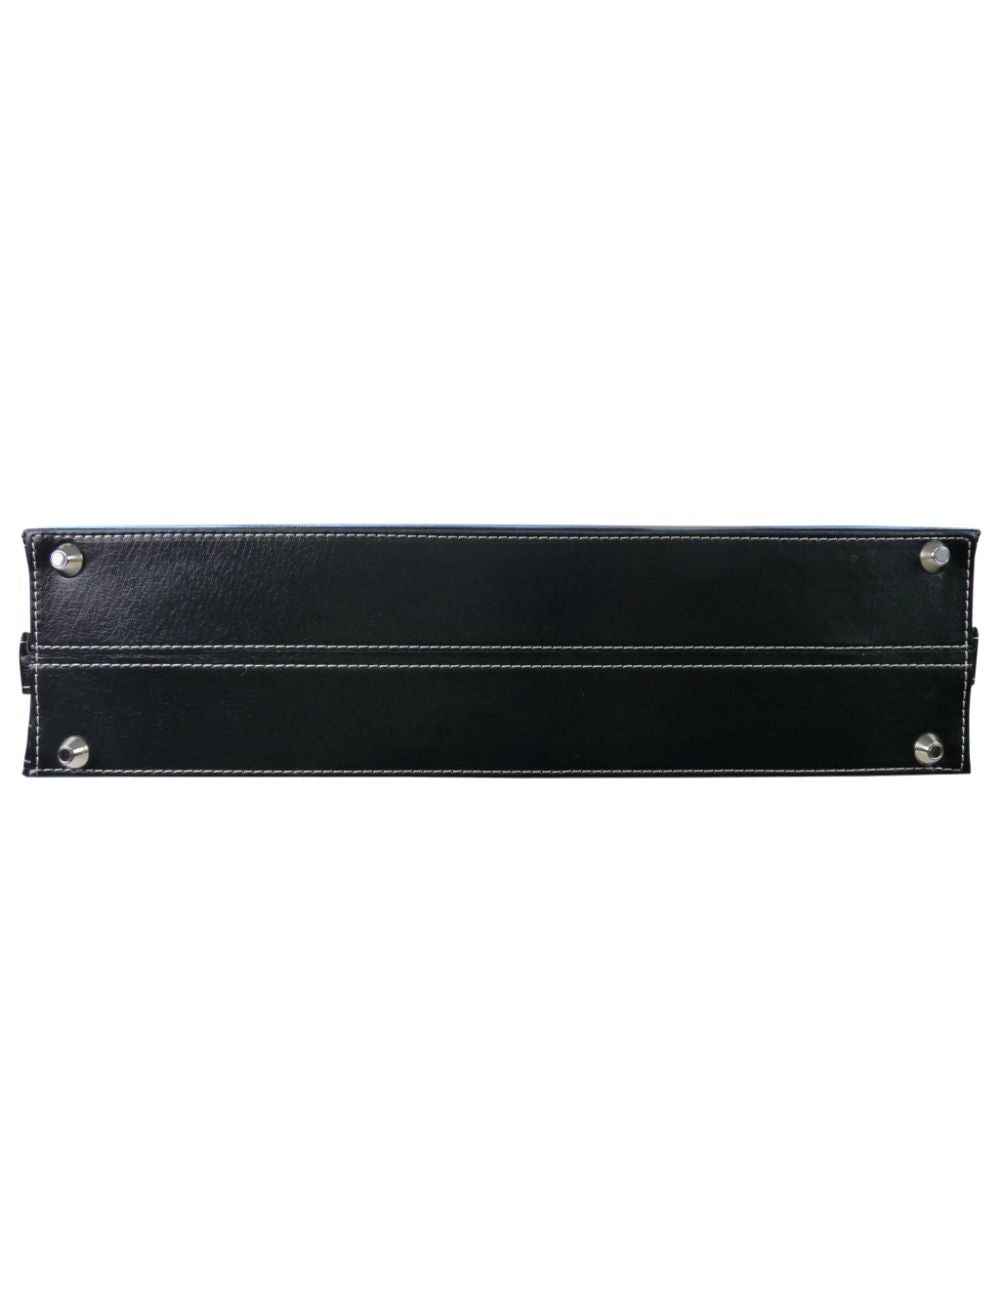 Roamlite Executive Briefcase Black Pu Leather RL919  bottom